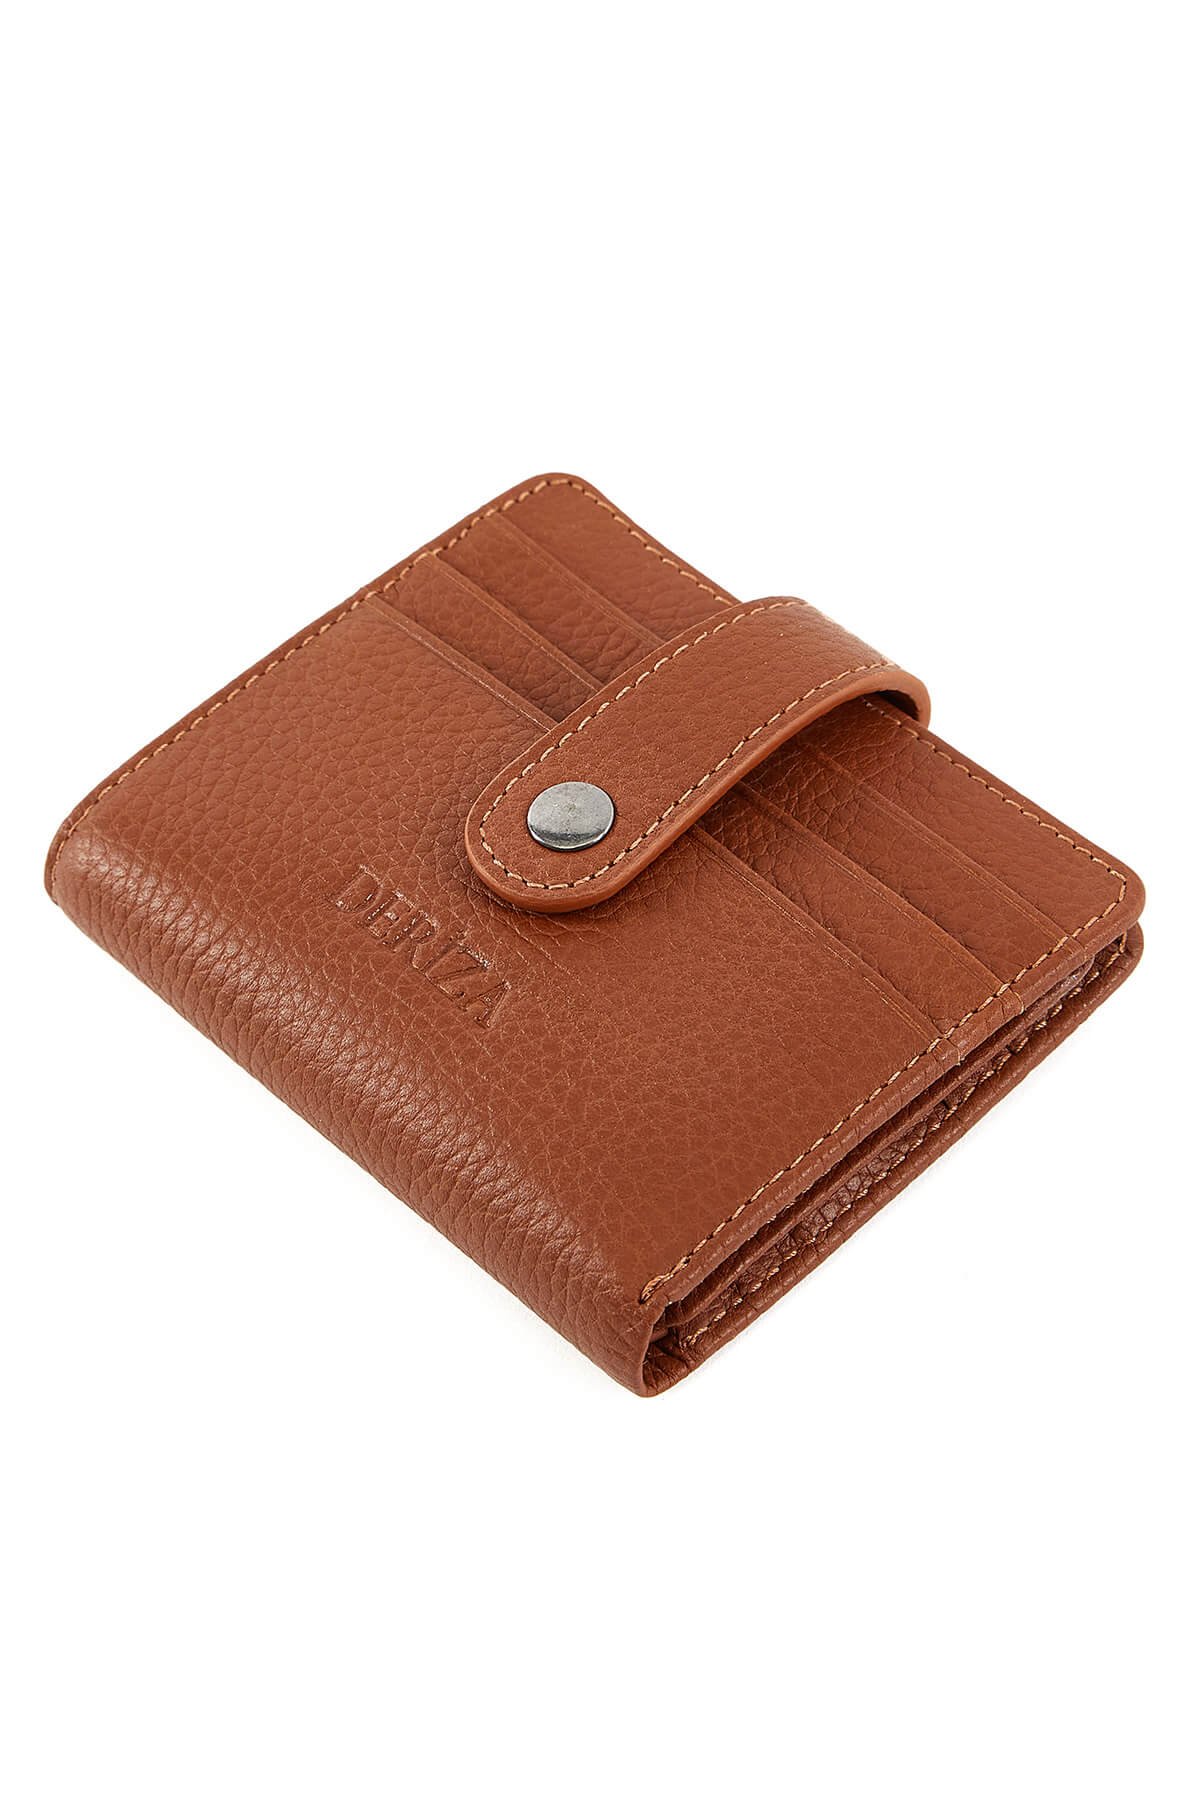 Cosmoline Genuine Leather Wallet Tan